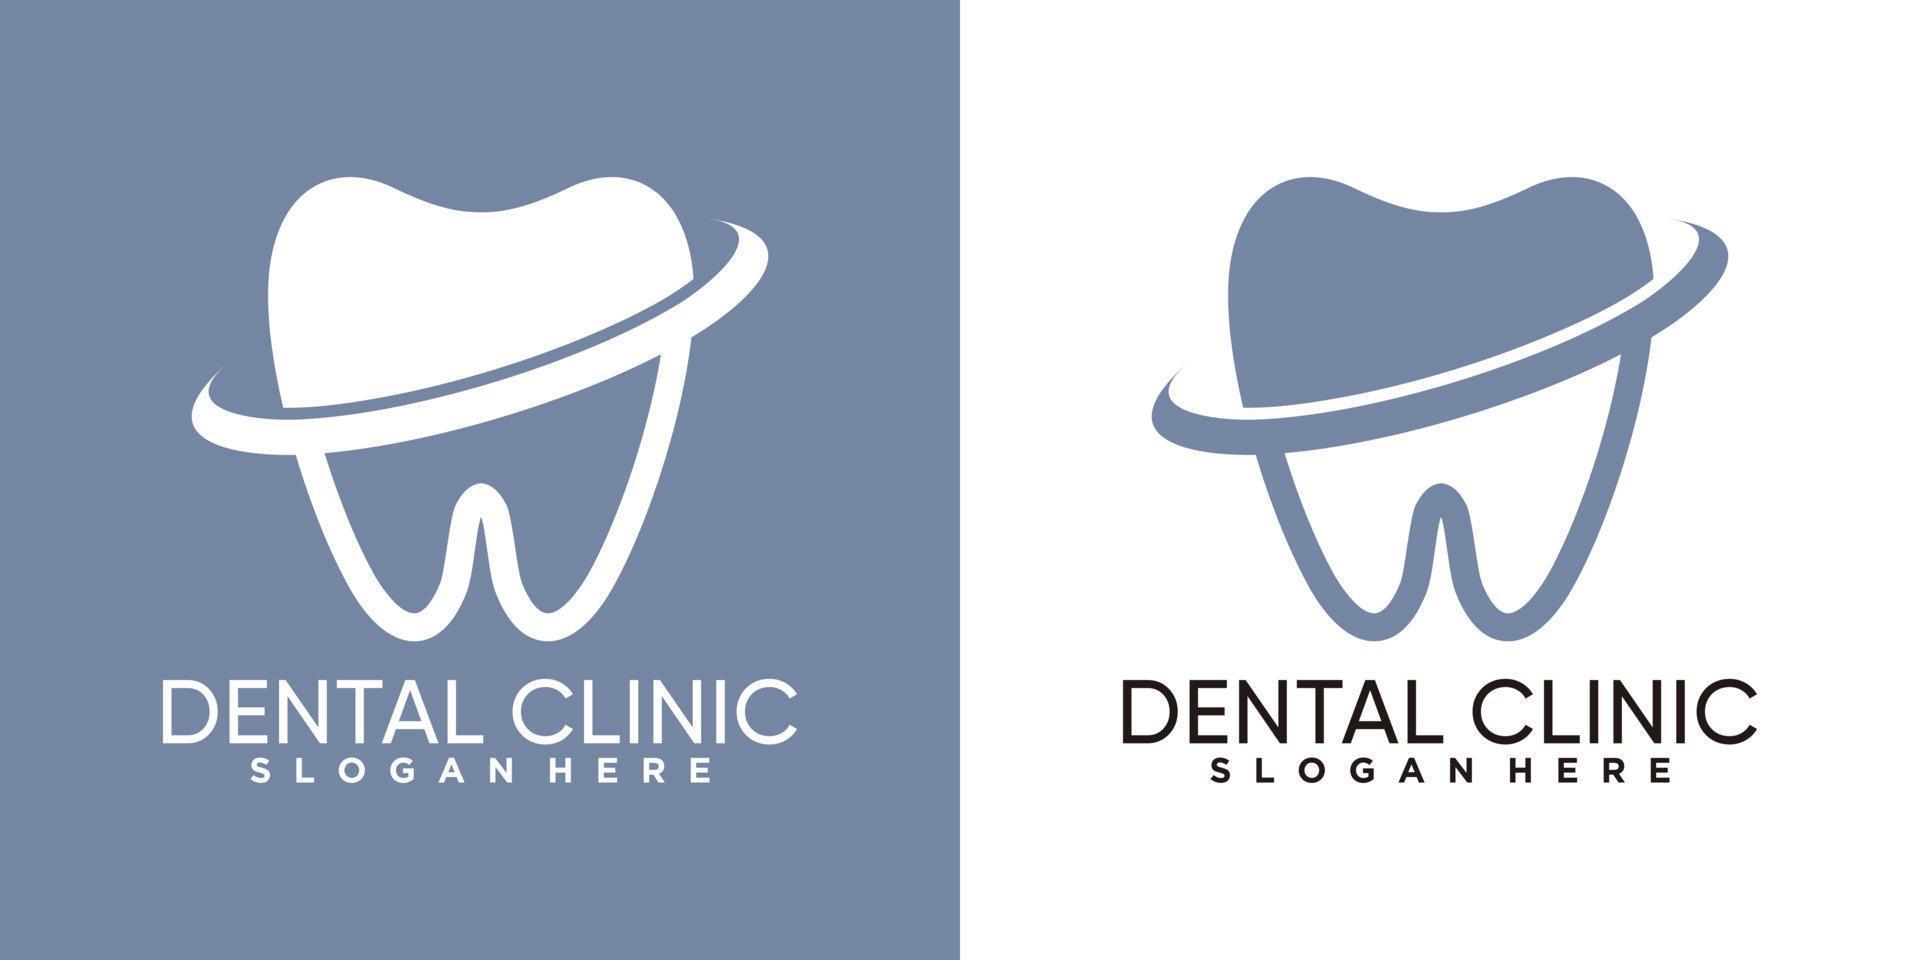 dental clinic logo design with line art style vector